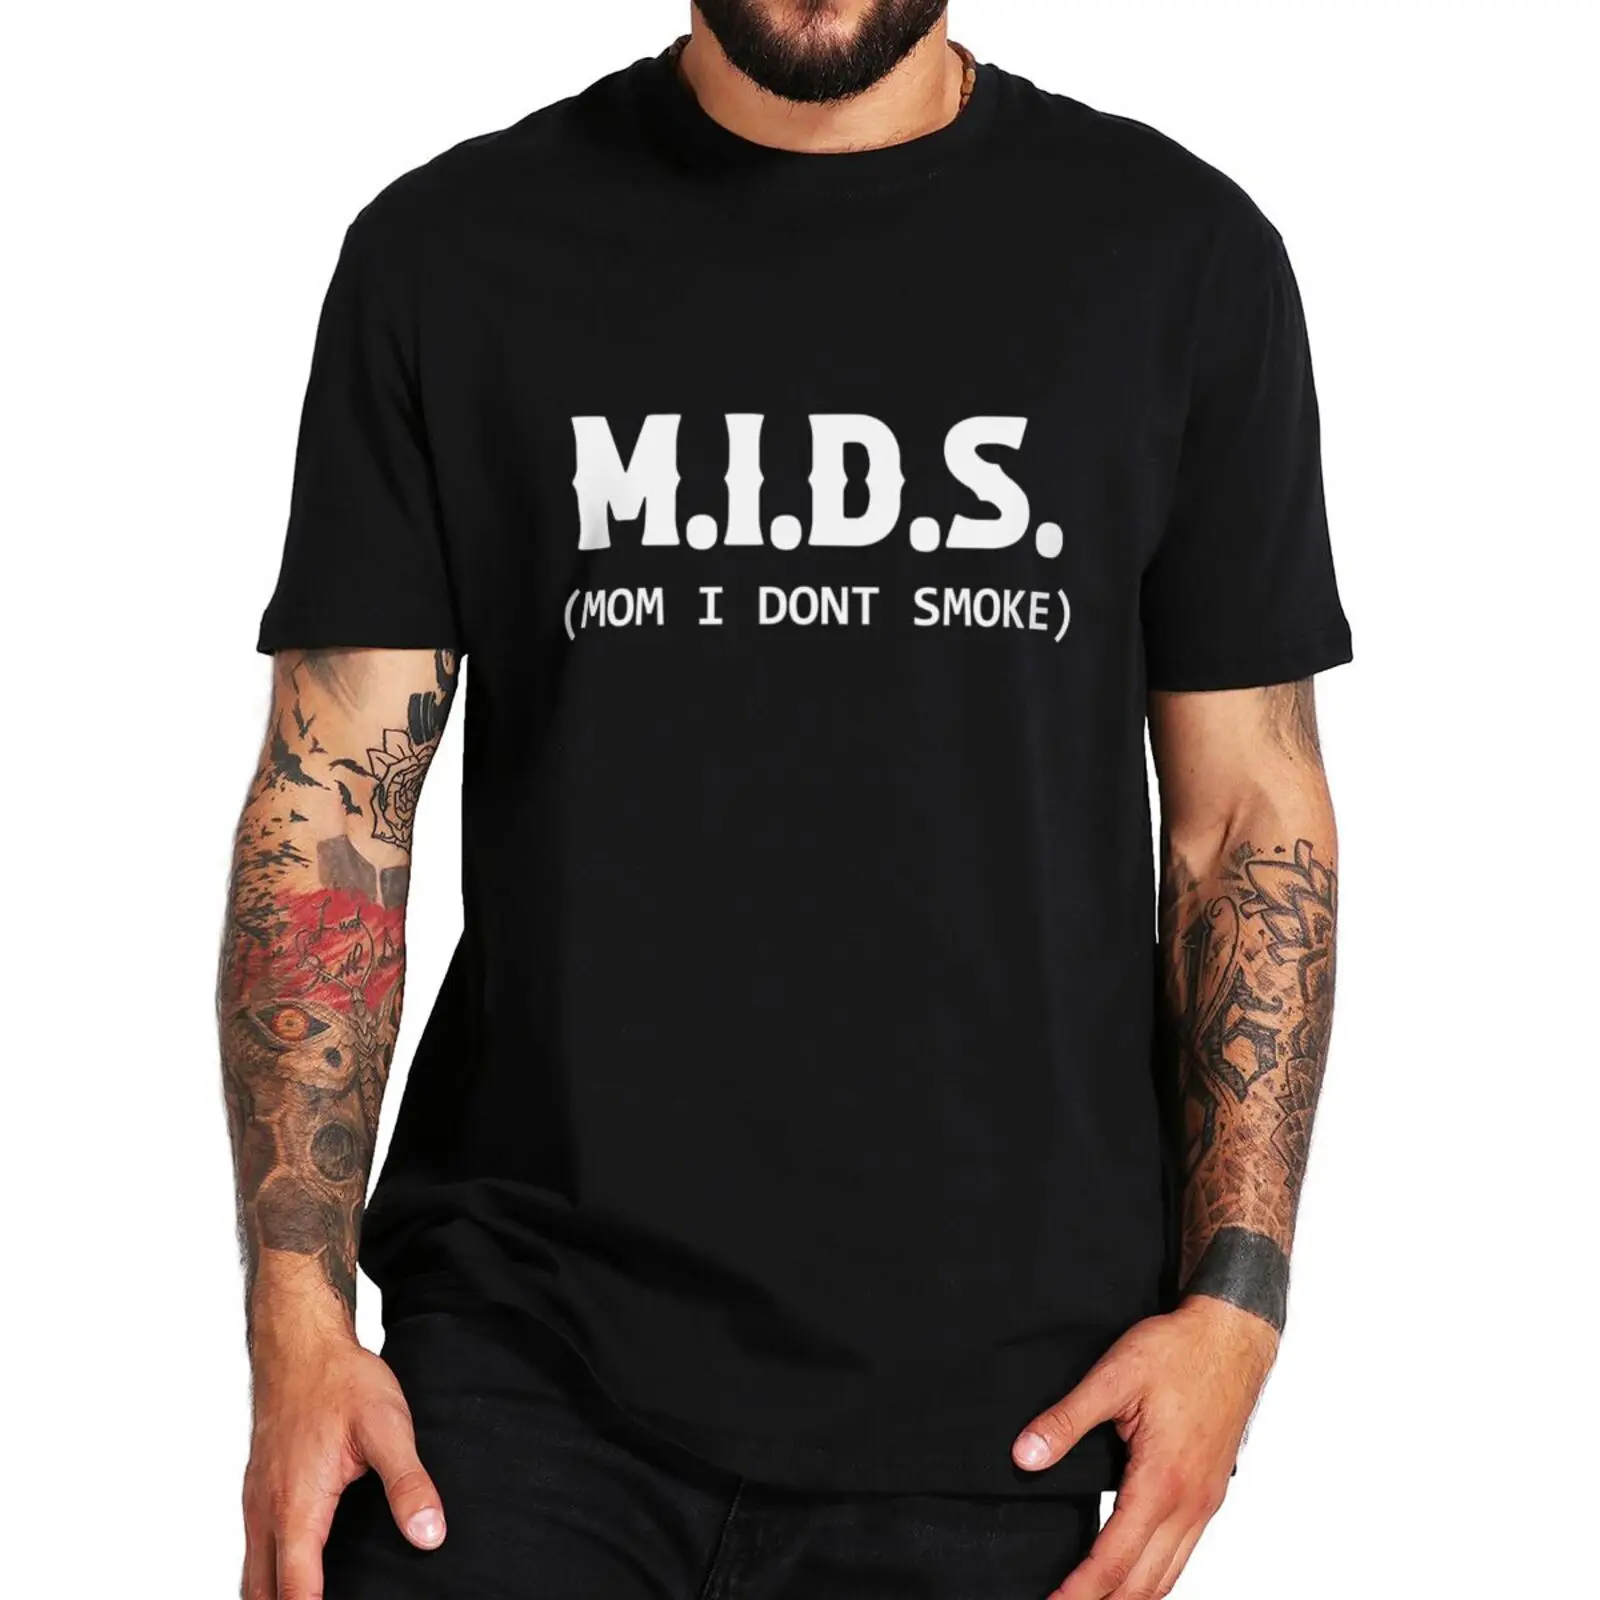 

MIDS Mom I Dont Smoke T Shirt Funny Meme Popular Sayings Humor Short Sleeve Casual 100% Cotton Unisex EU Size T-shirts